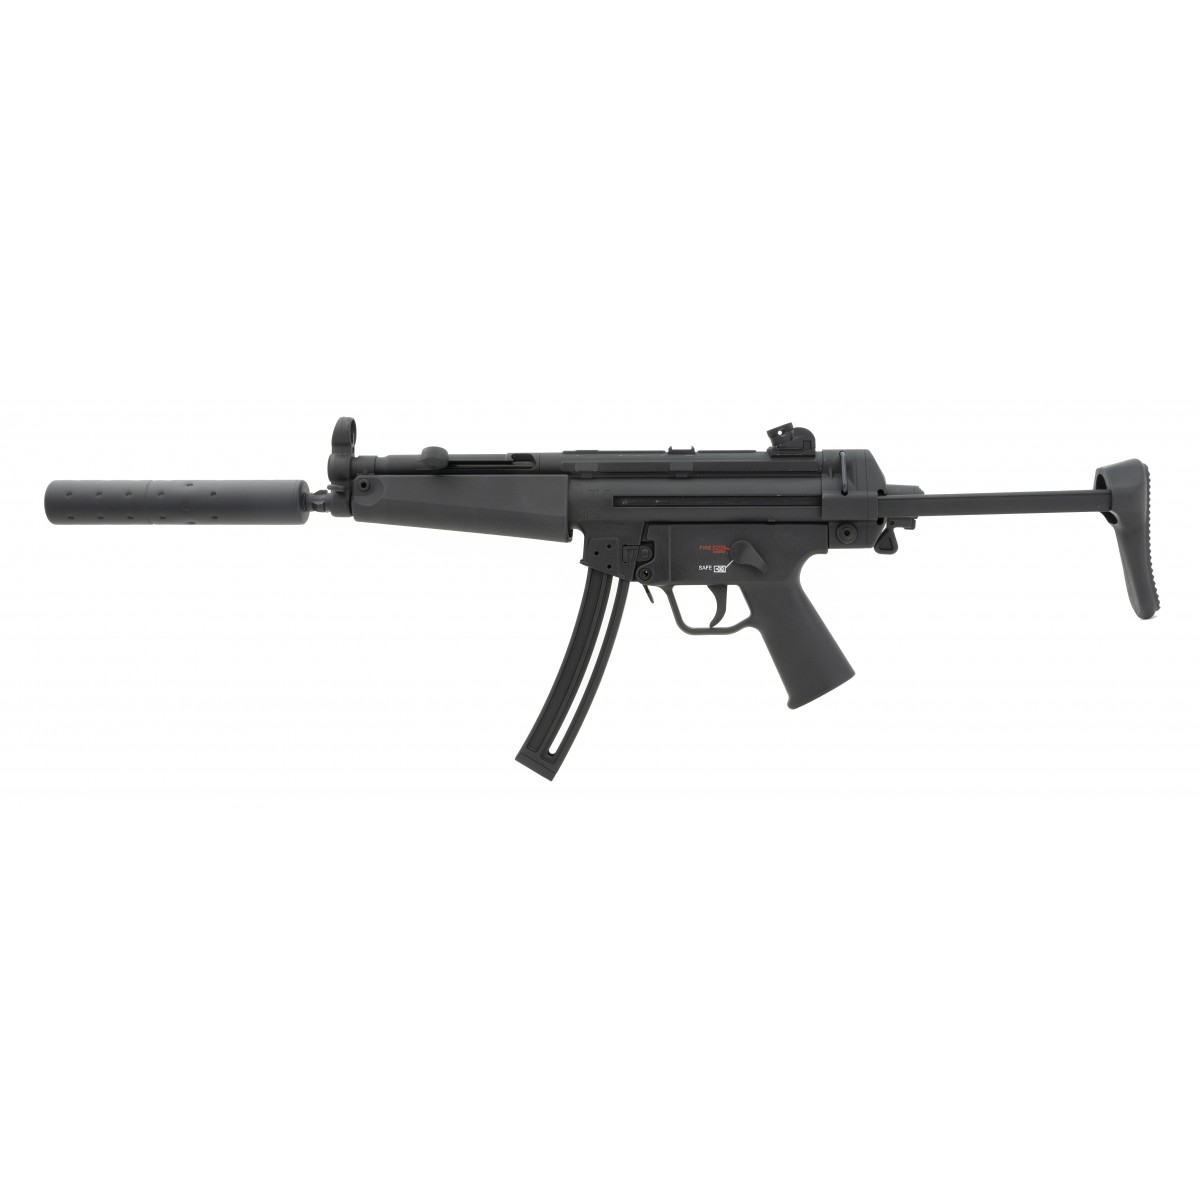 HK MP5 .22 LR caliber rifle for sale.